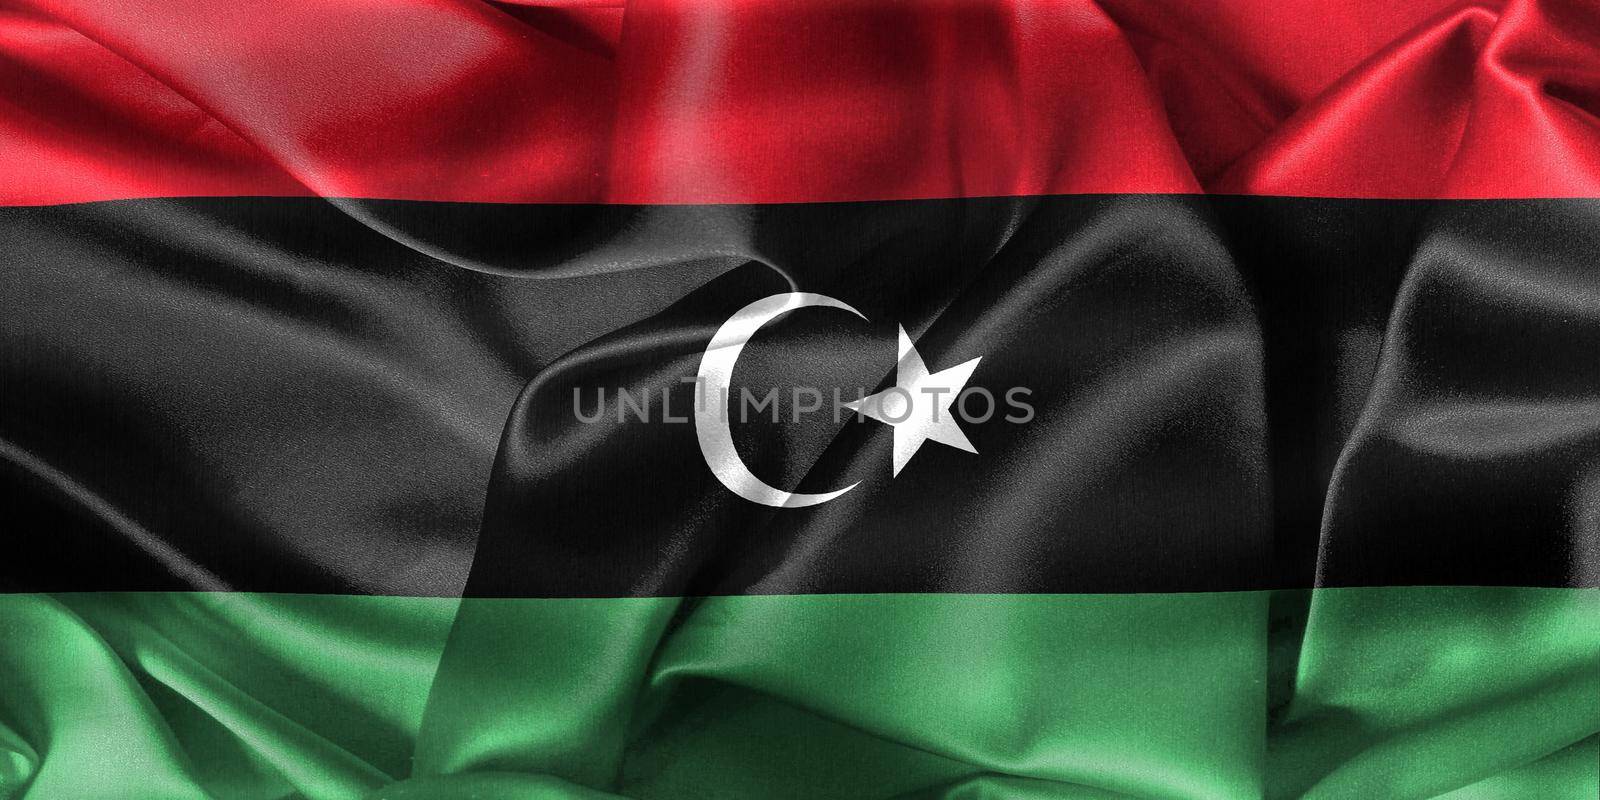 3D-Illustration of a Libya flag - realistic waving fabric flag by MP_foto71